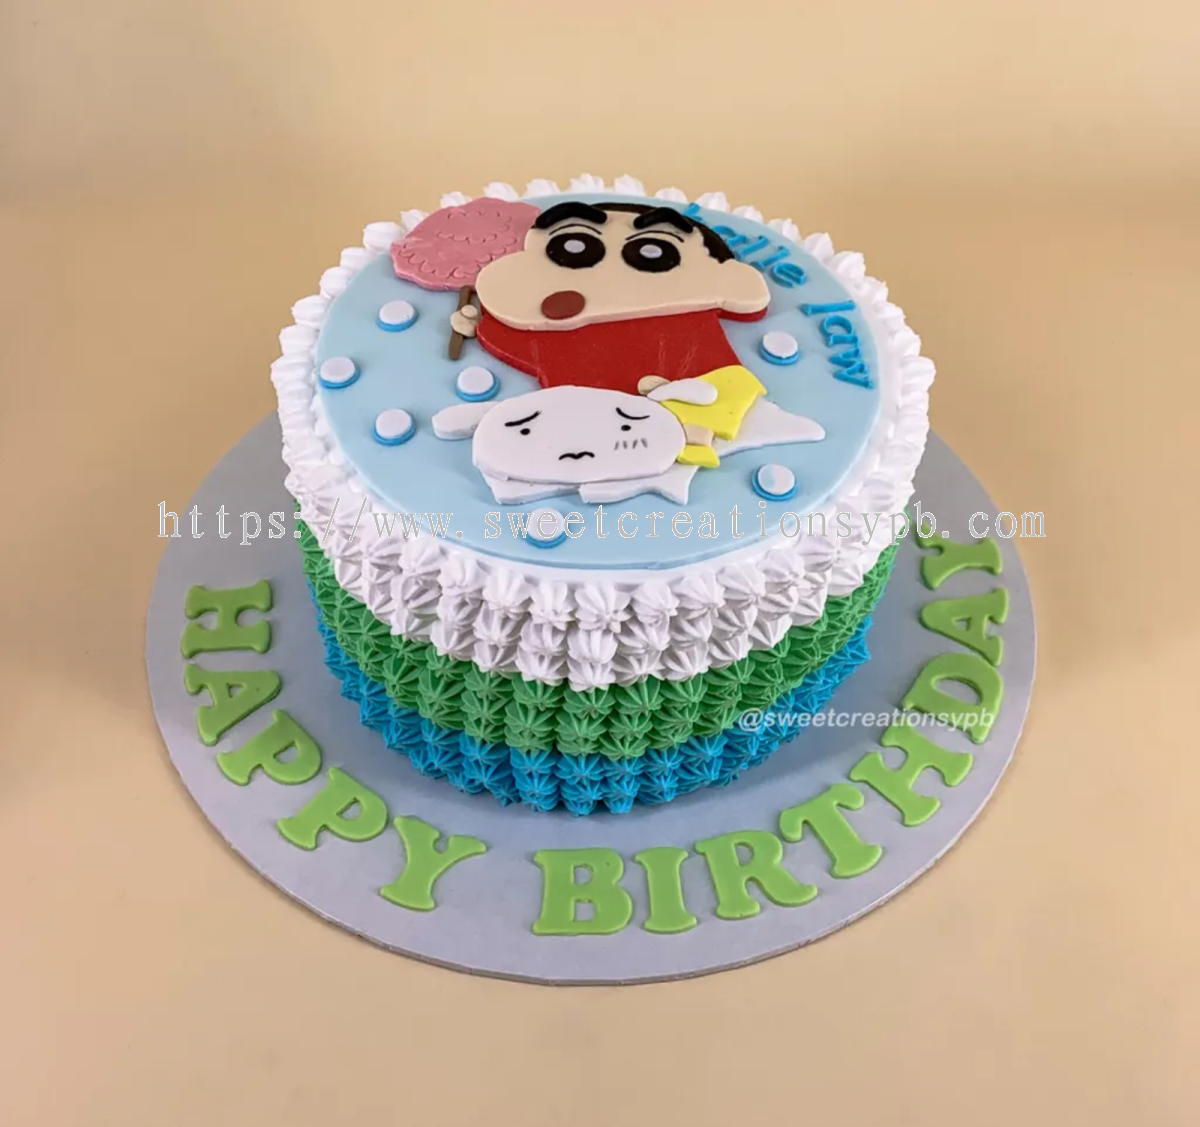 Best Shinchan Theme Cake In Mumbai | Order Online